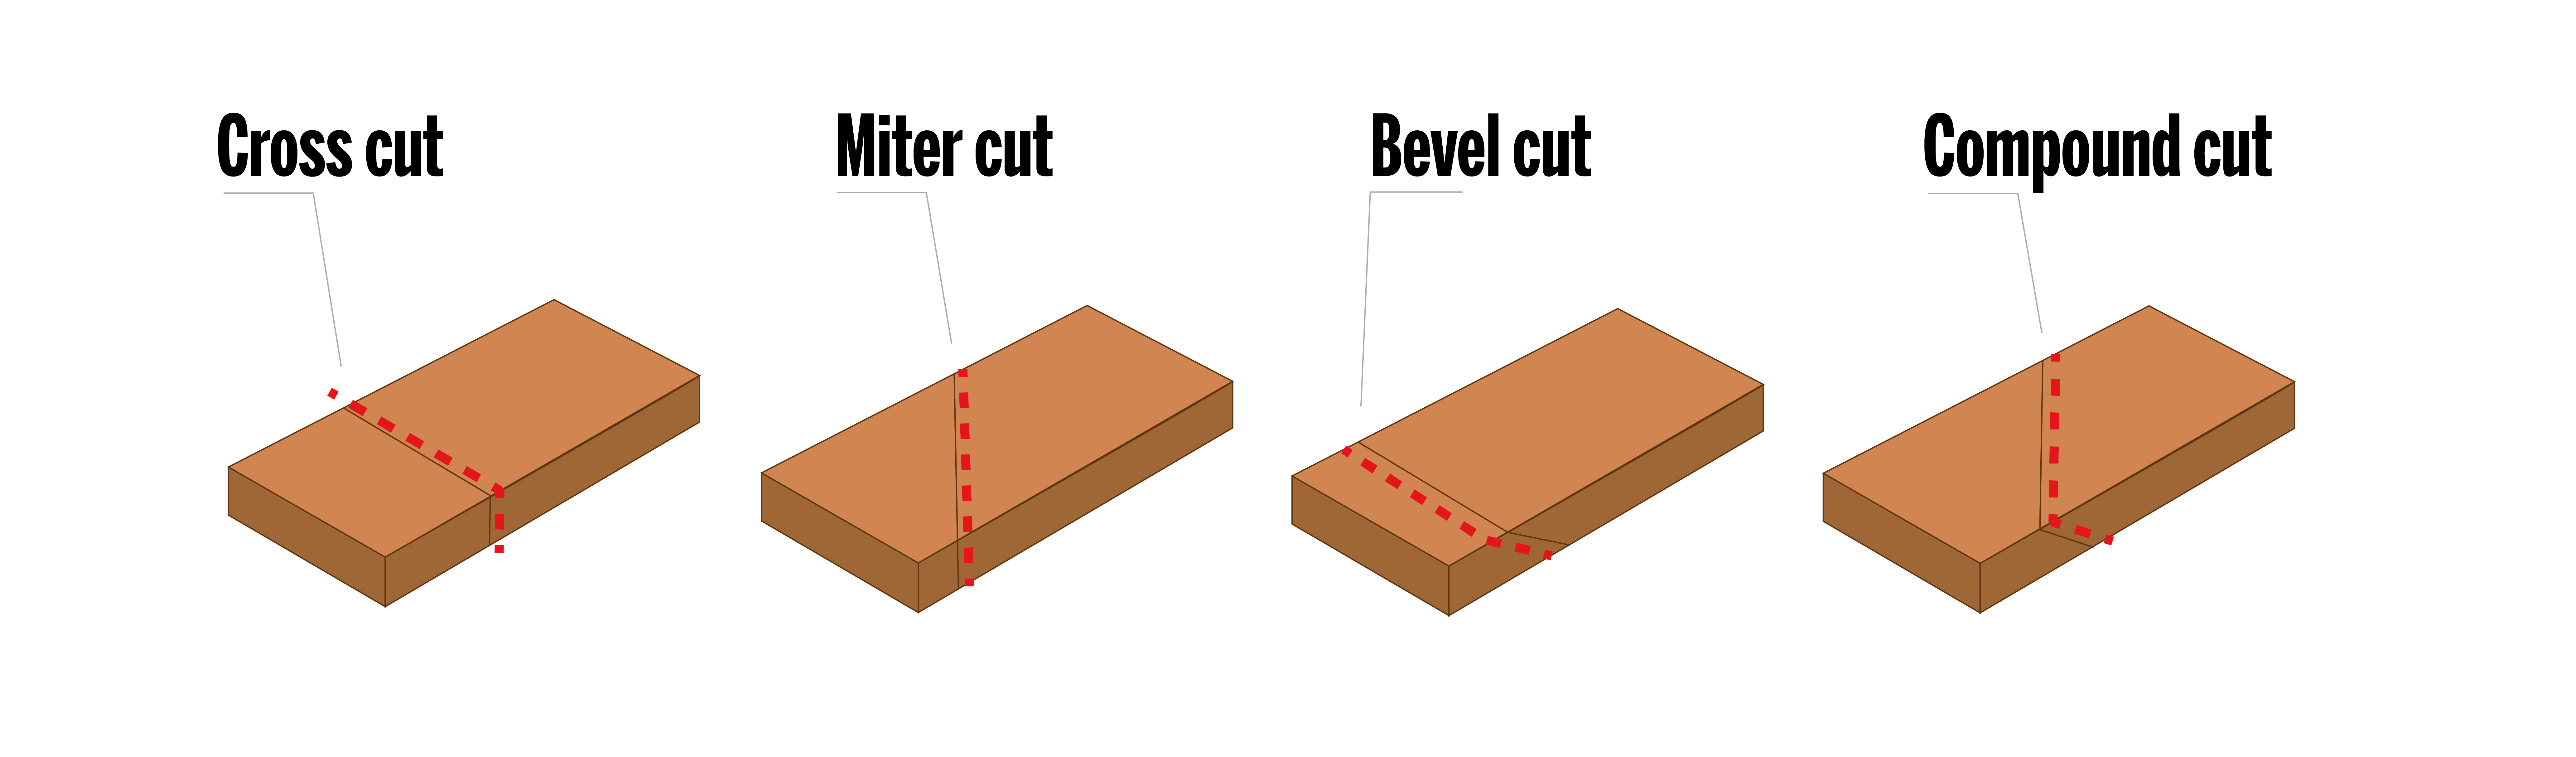 bevel cut